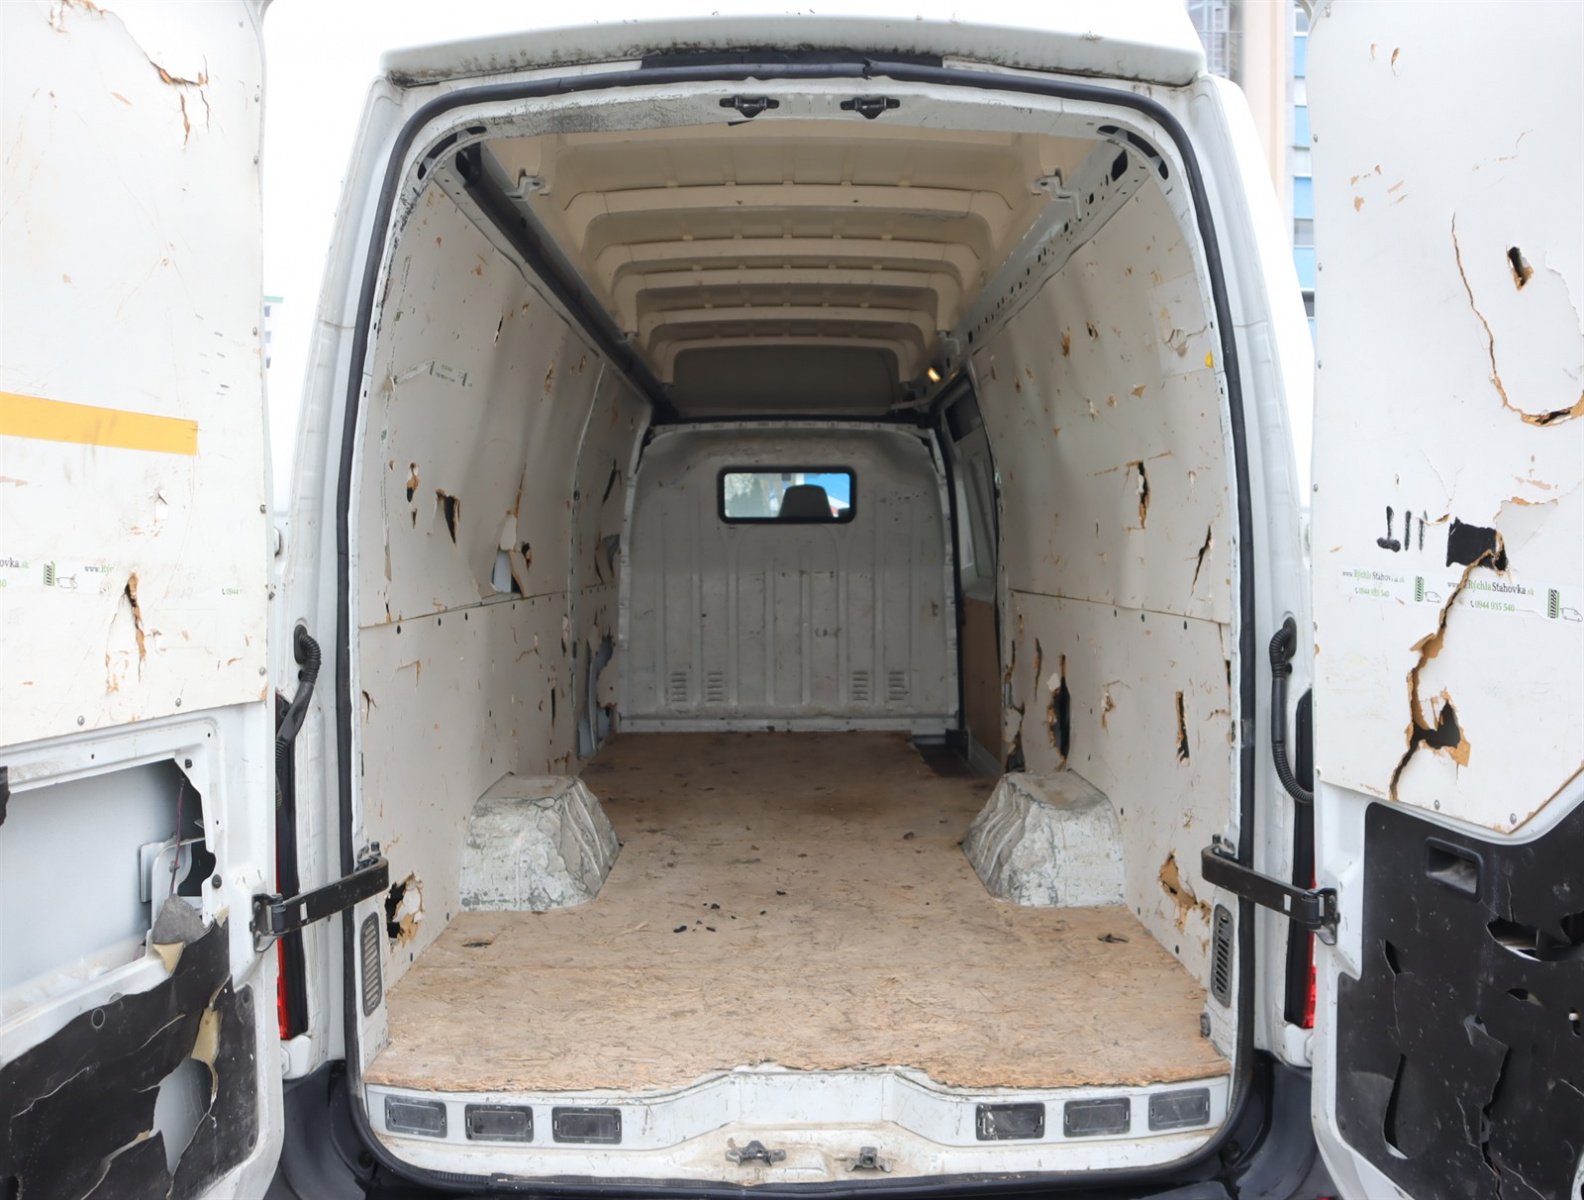 Inside of van